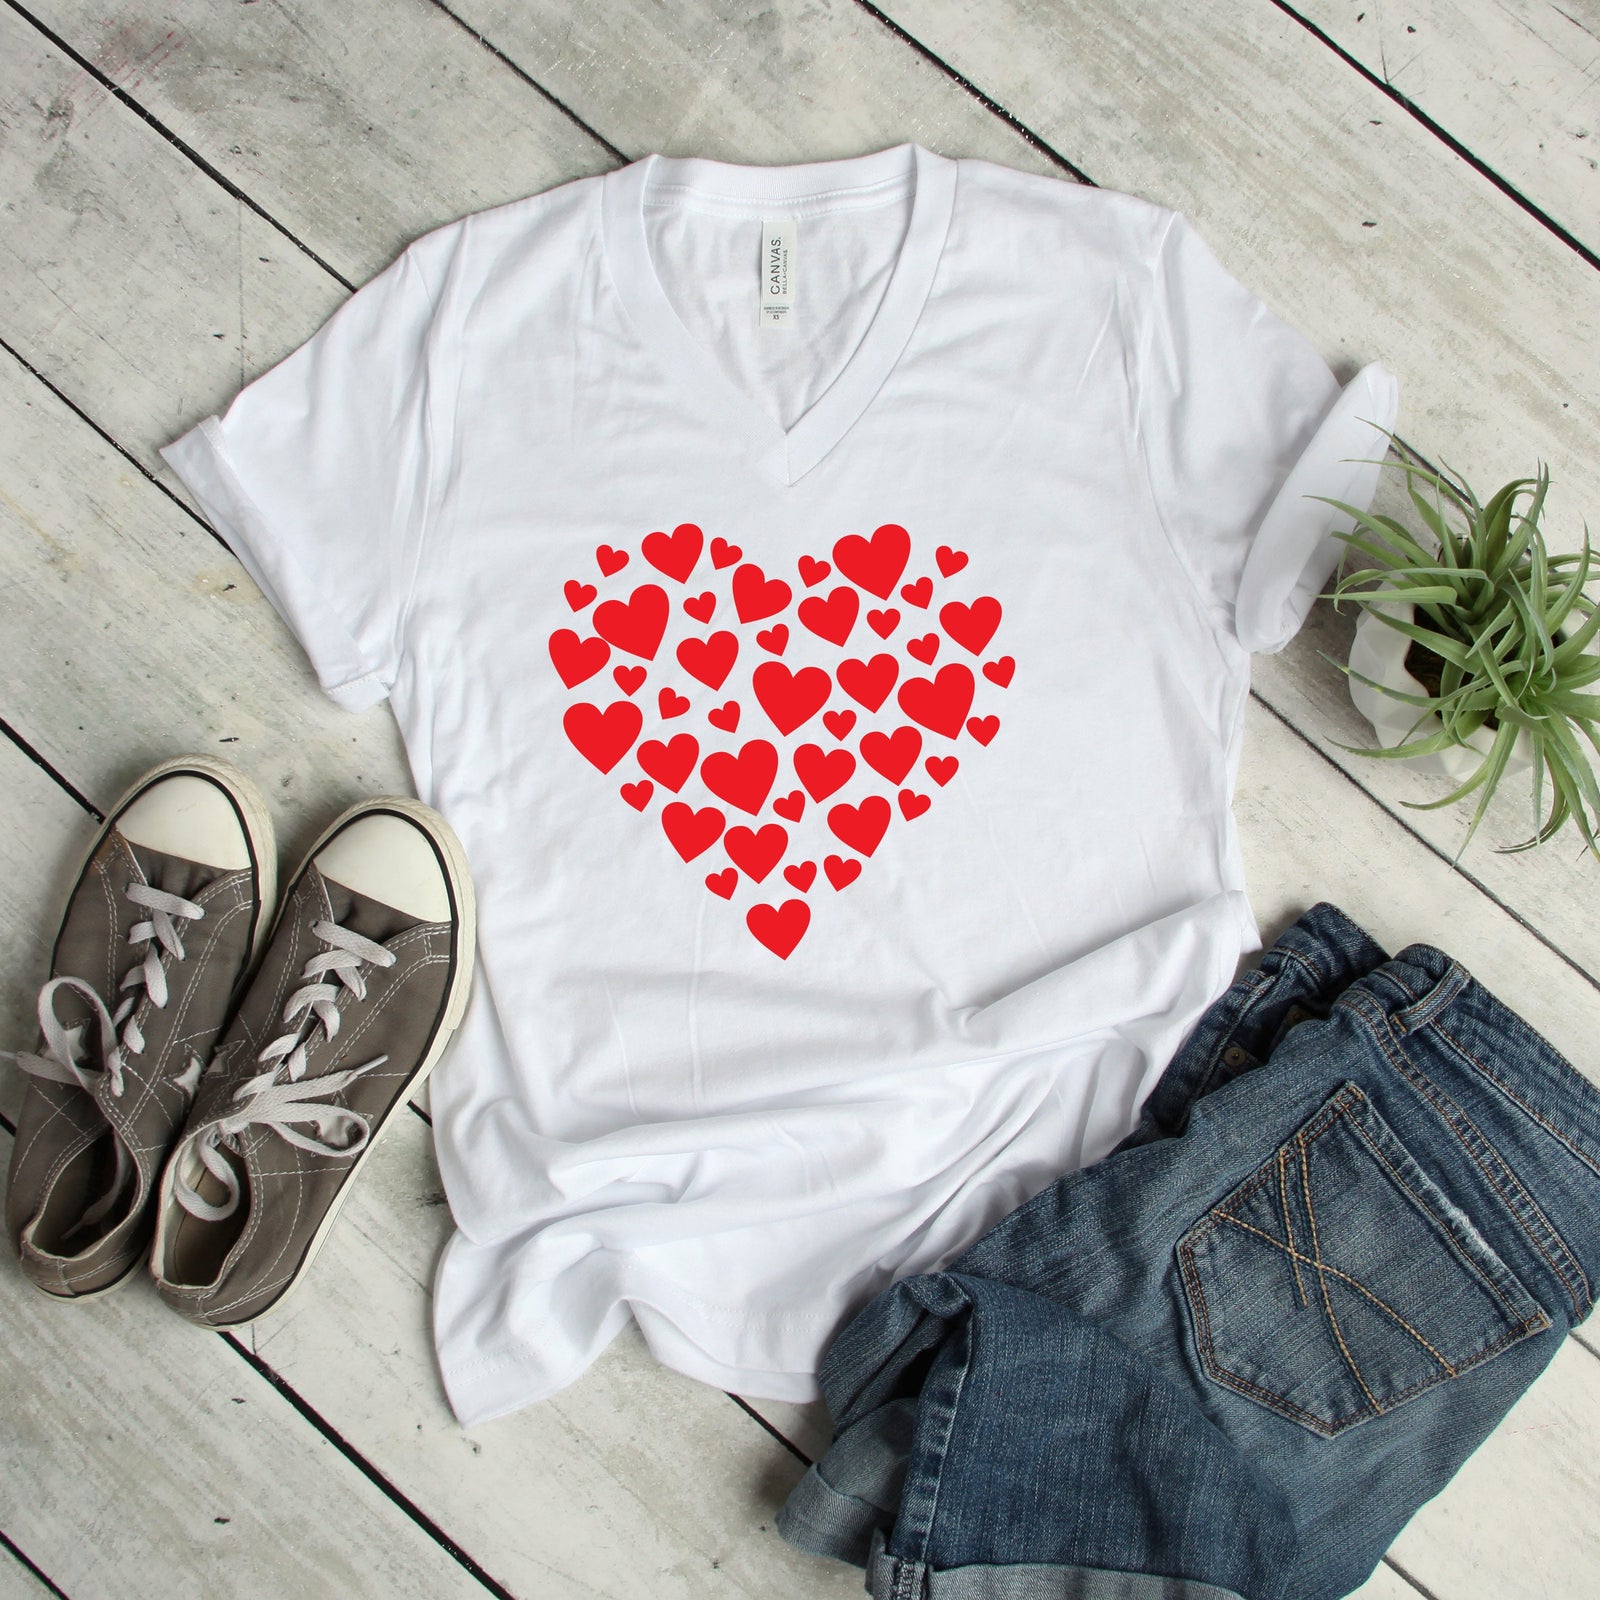 Hearts in Heart Shape T Shirt - Unisex Adult Valentine's Day Heart Shirt - Valentines Day Gift